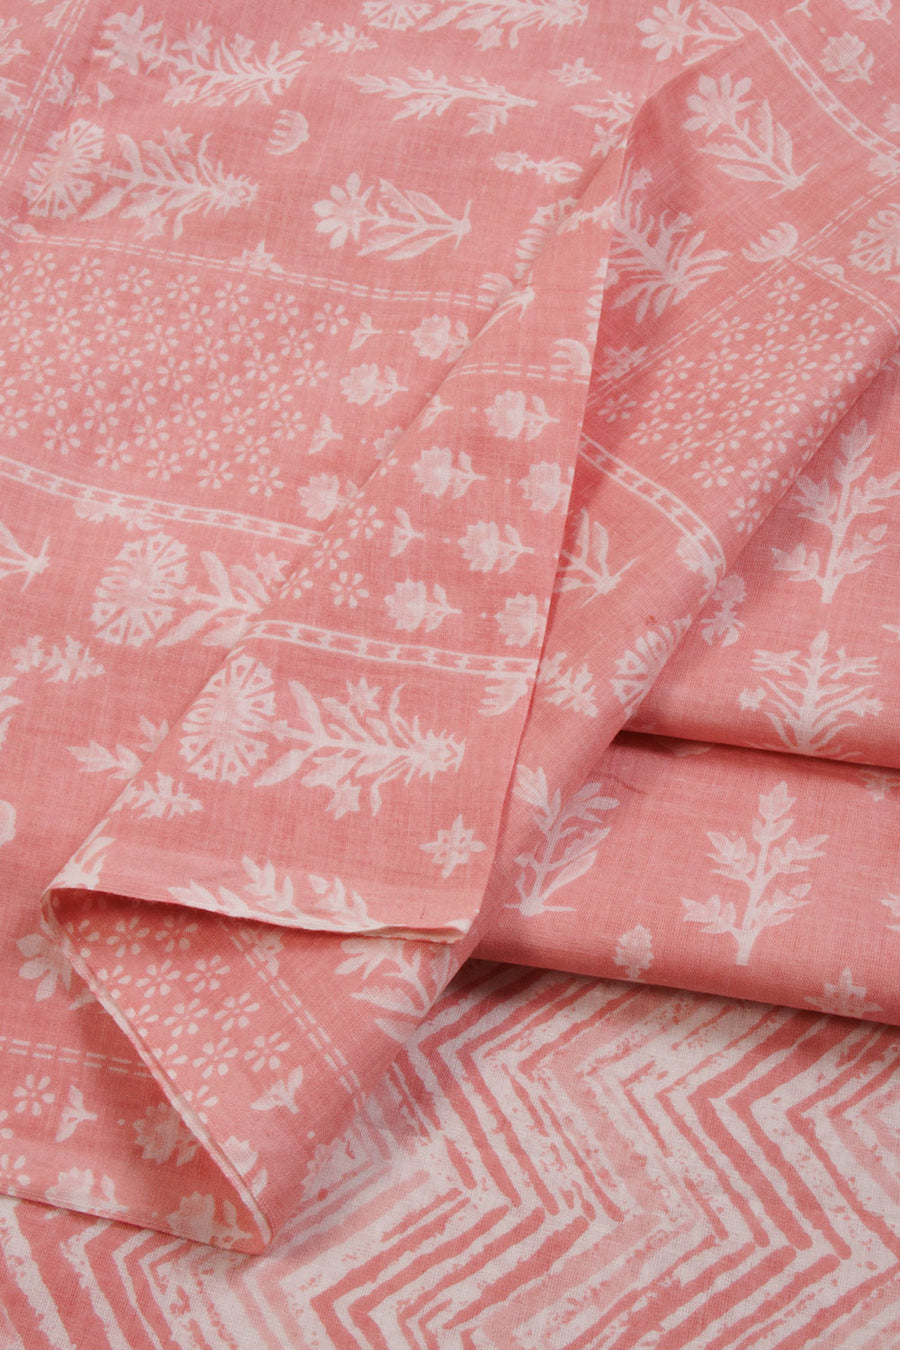 Peach 2-Piece Hand Block Printed Cotton Salwar Suit Material  - Avishya